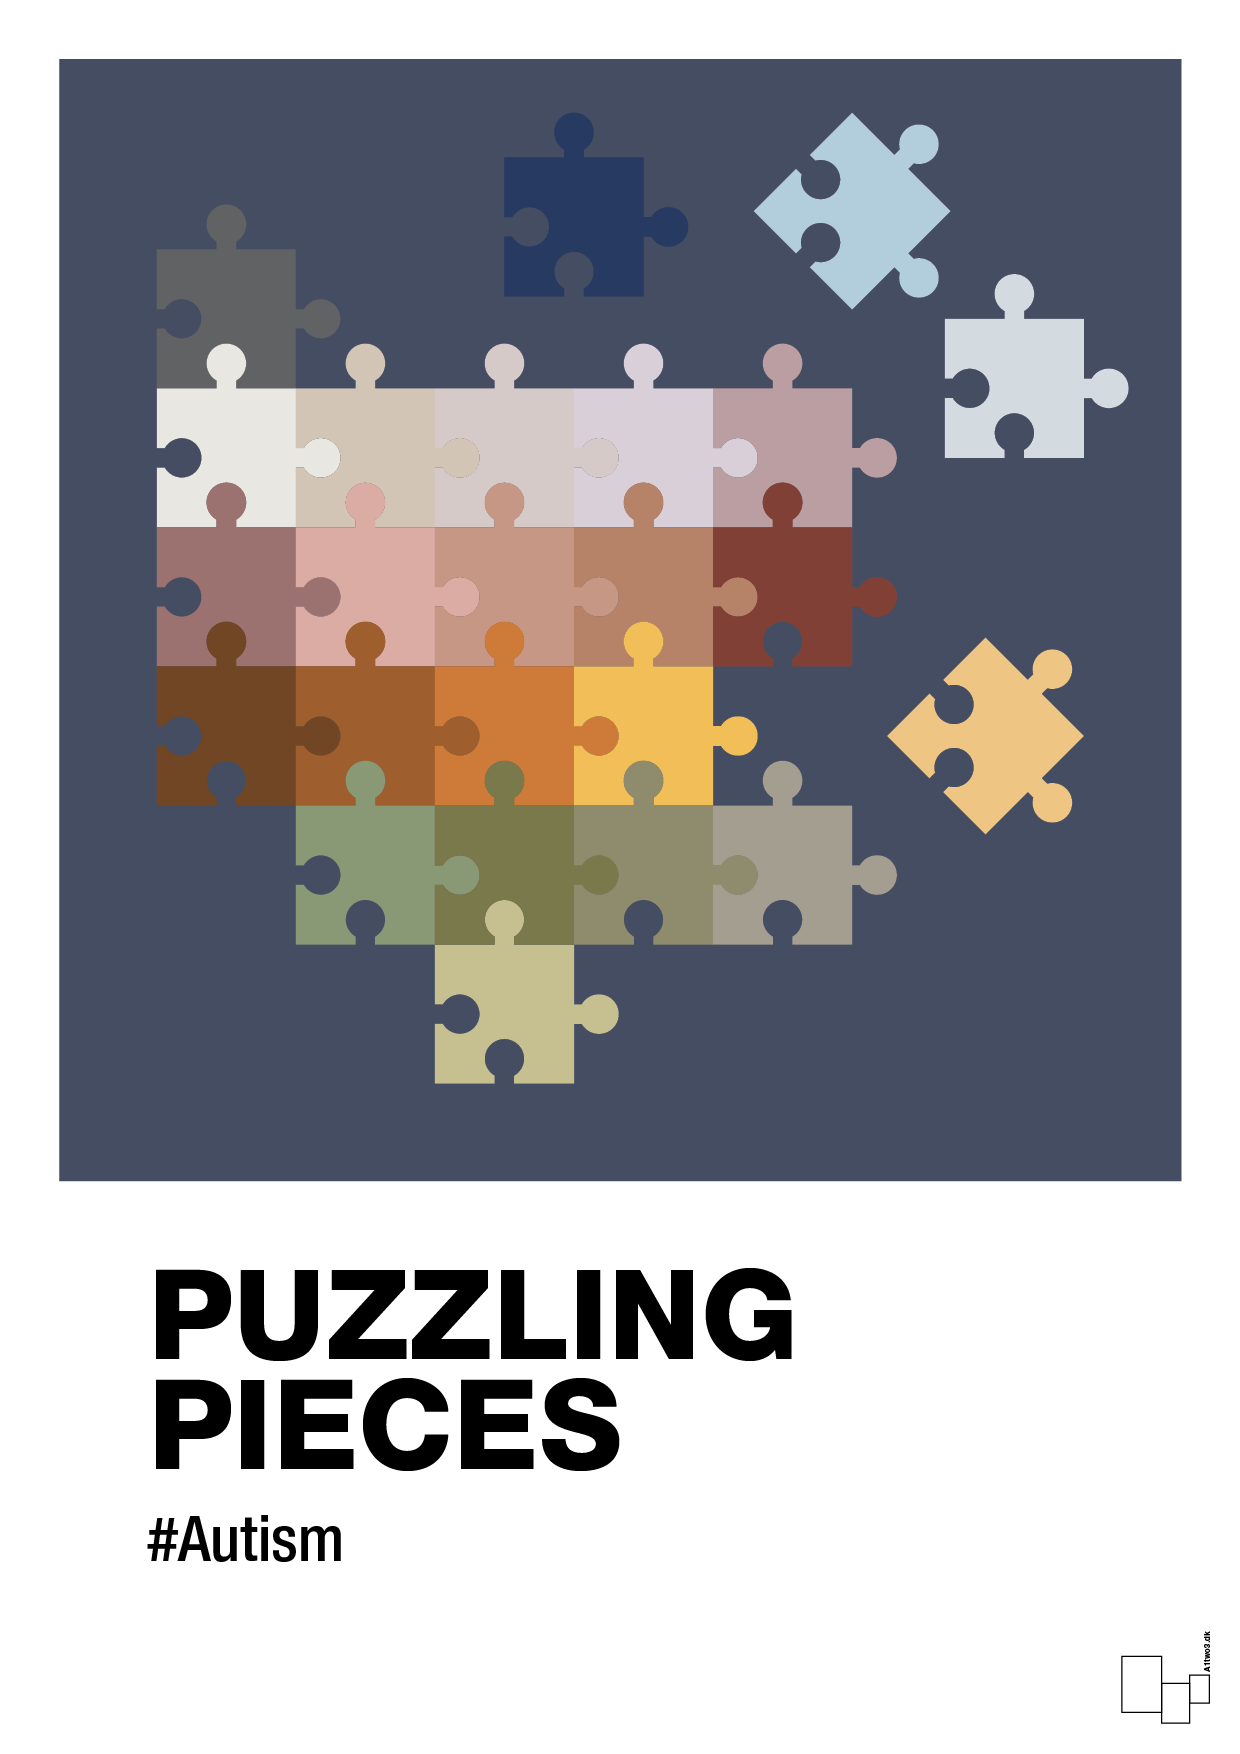 puzzling pieces - Plakat med Samfund i Petrol